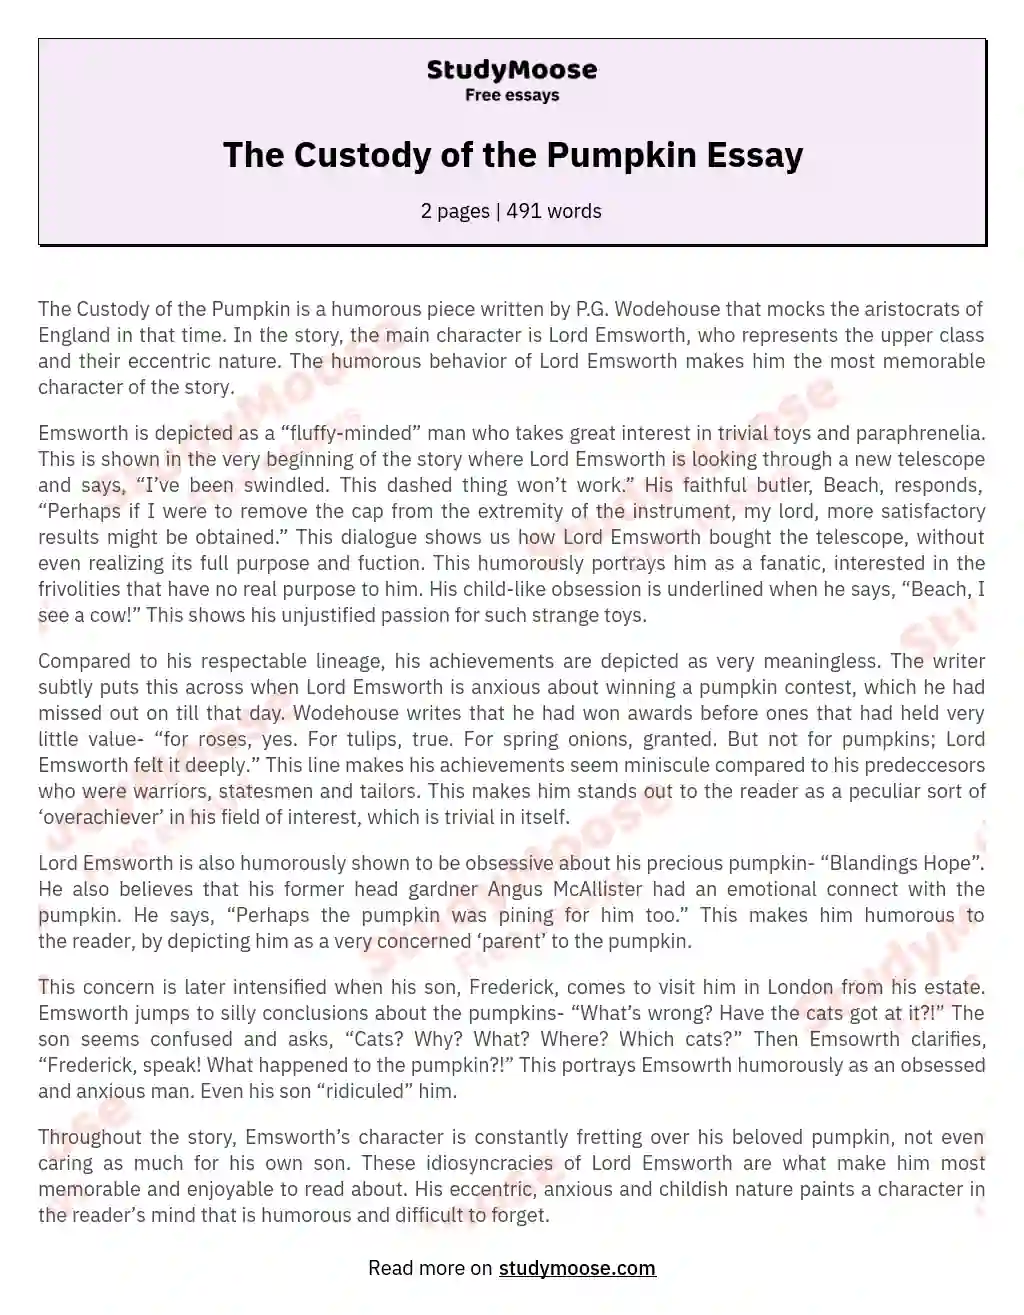 The Custody of the Pumpkin Essay essay